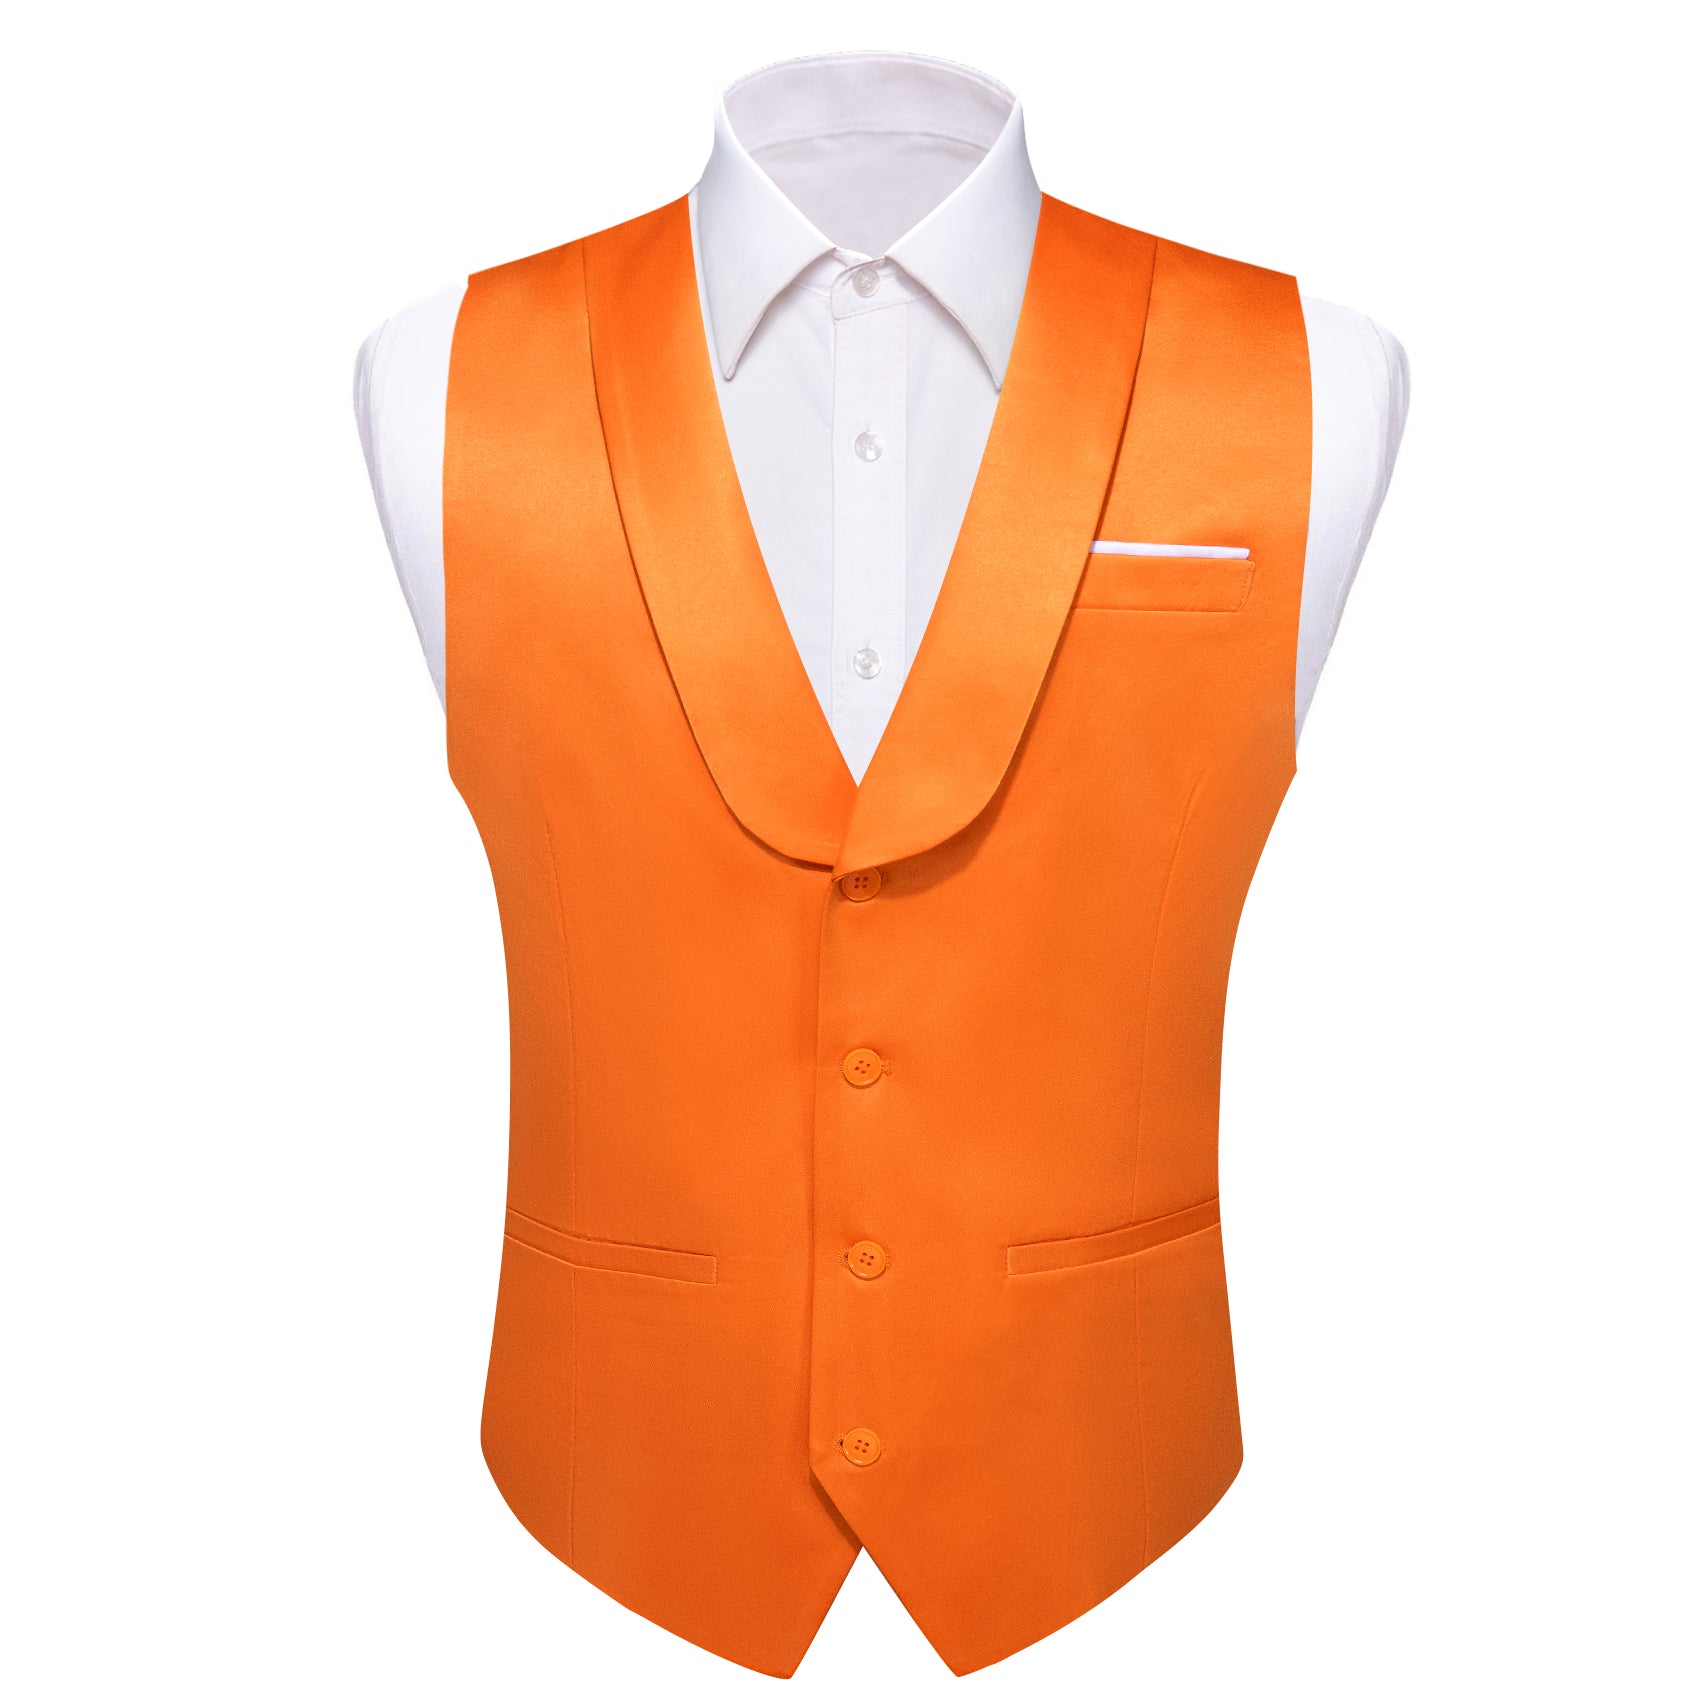  Orange Solid Shawl Collar Vest Waistcoat